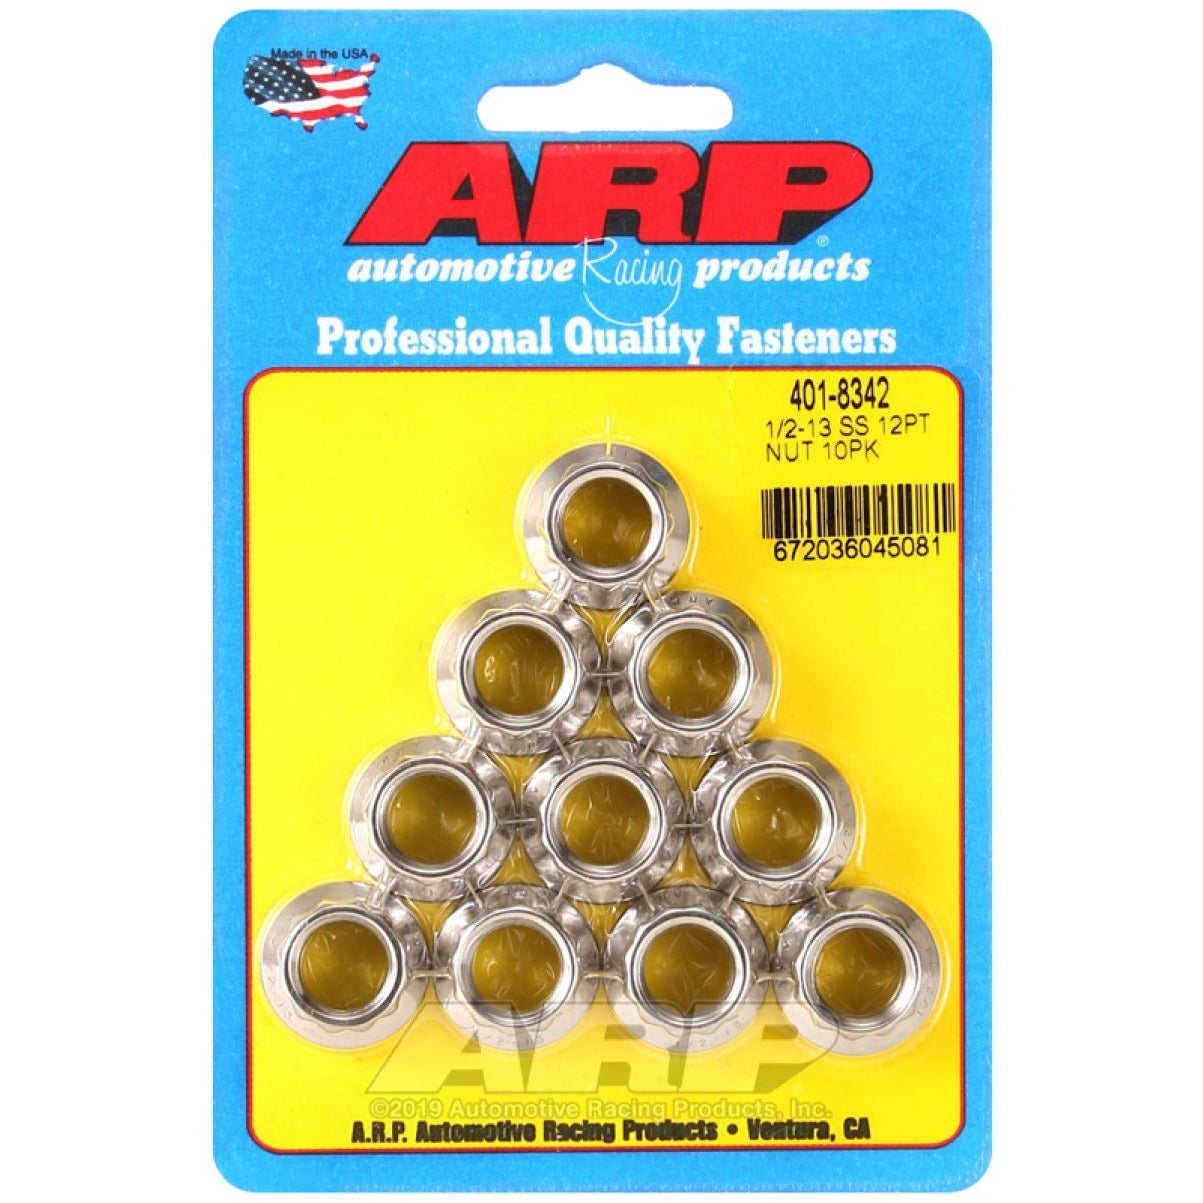 ARP 1/2-13 SS 12pt Nut Kit (Pack of 10) ARP Hardware Kits - Other